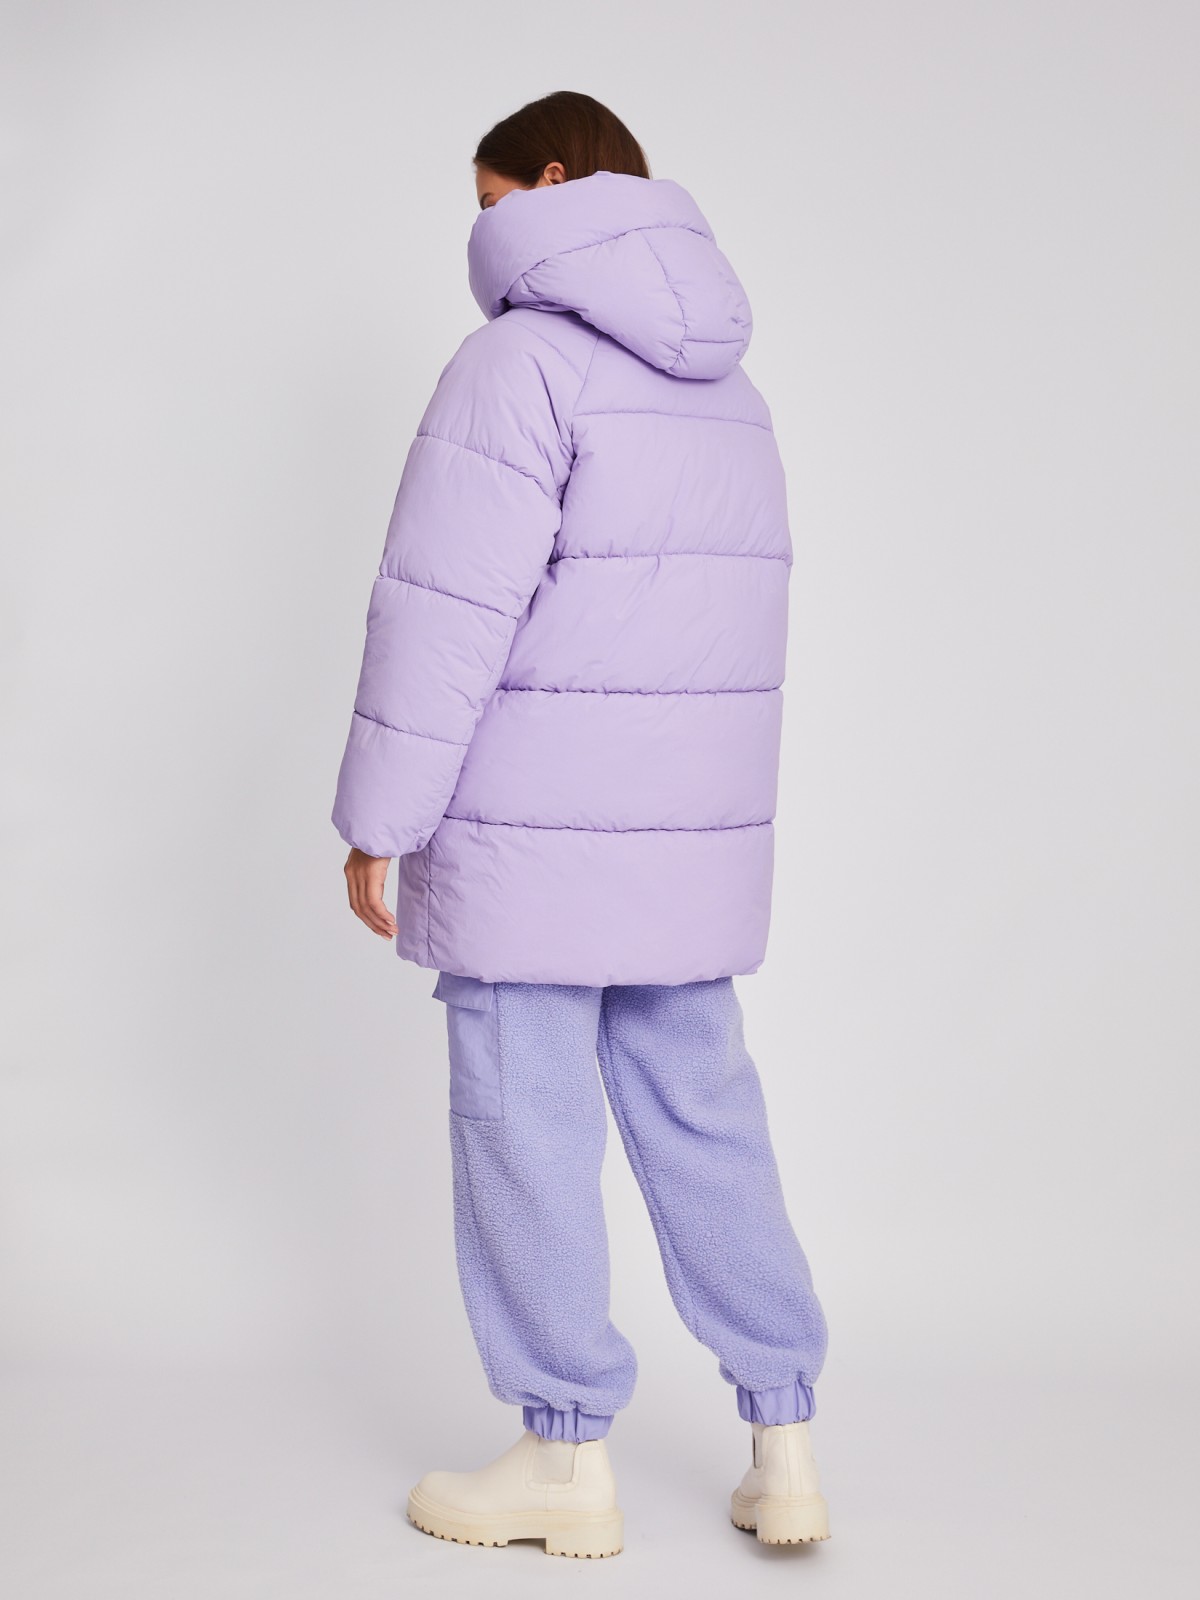 Тёплая куртка-пальто оверсайз силуэта с капюшоном zolla 02342520L054, цвет фиолетовый, размер S - фото 6